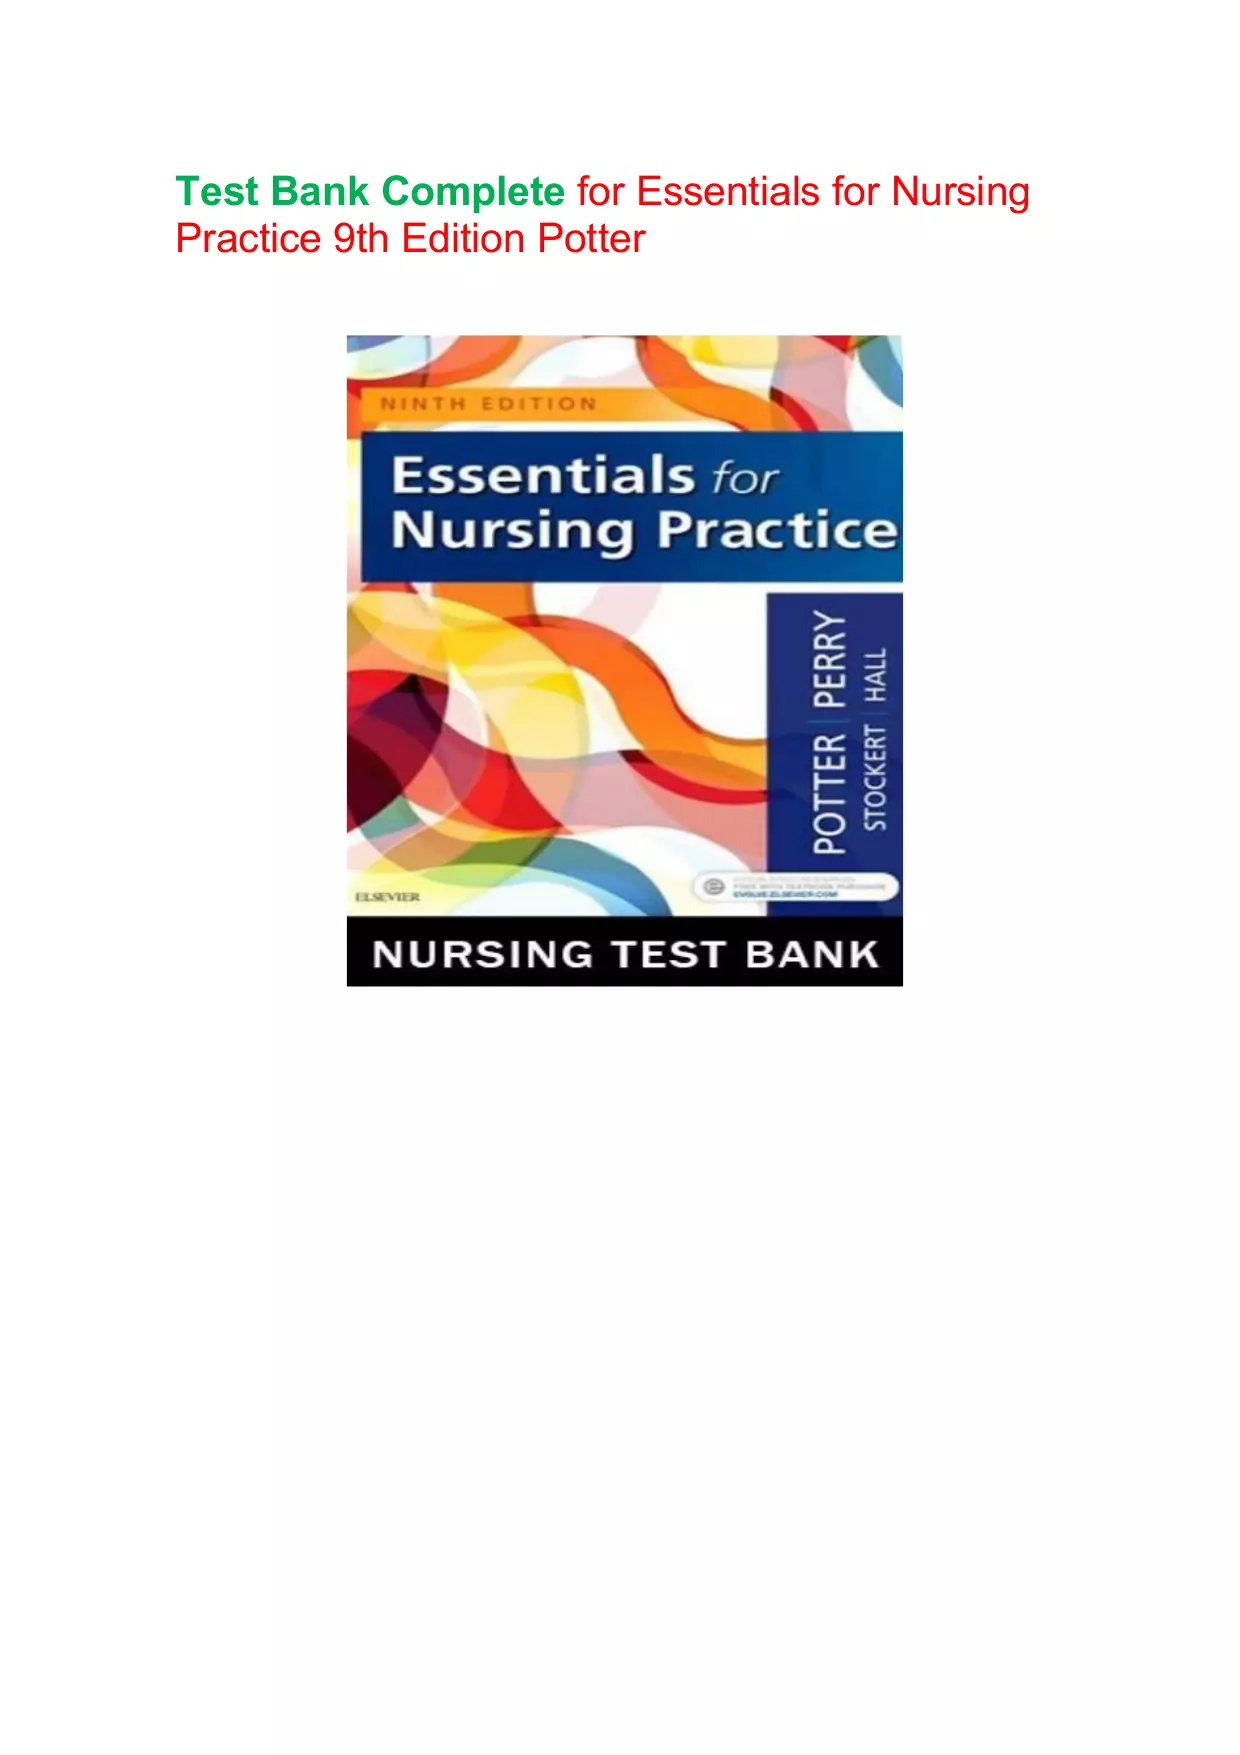 Download_test bank for advanced practice nursing essentials for